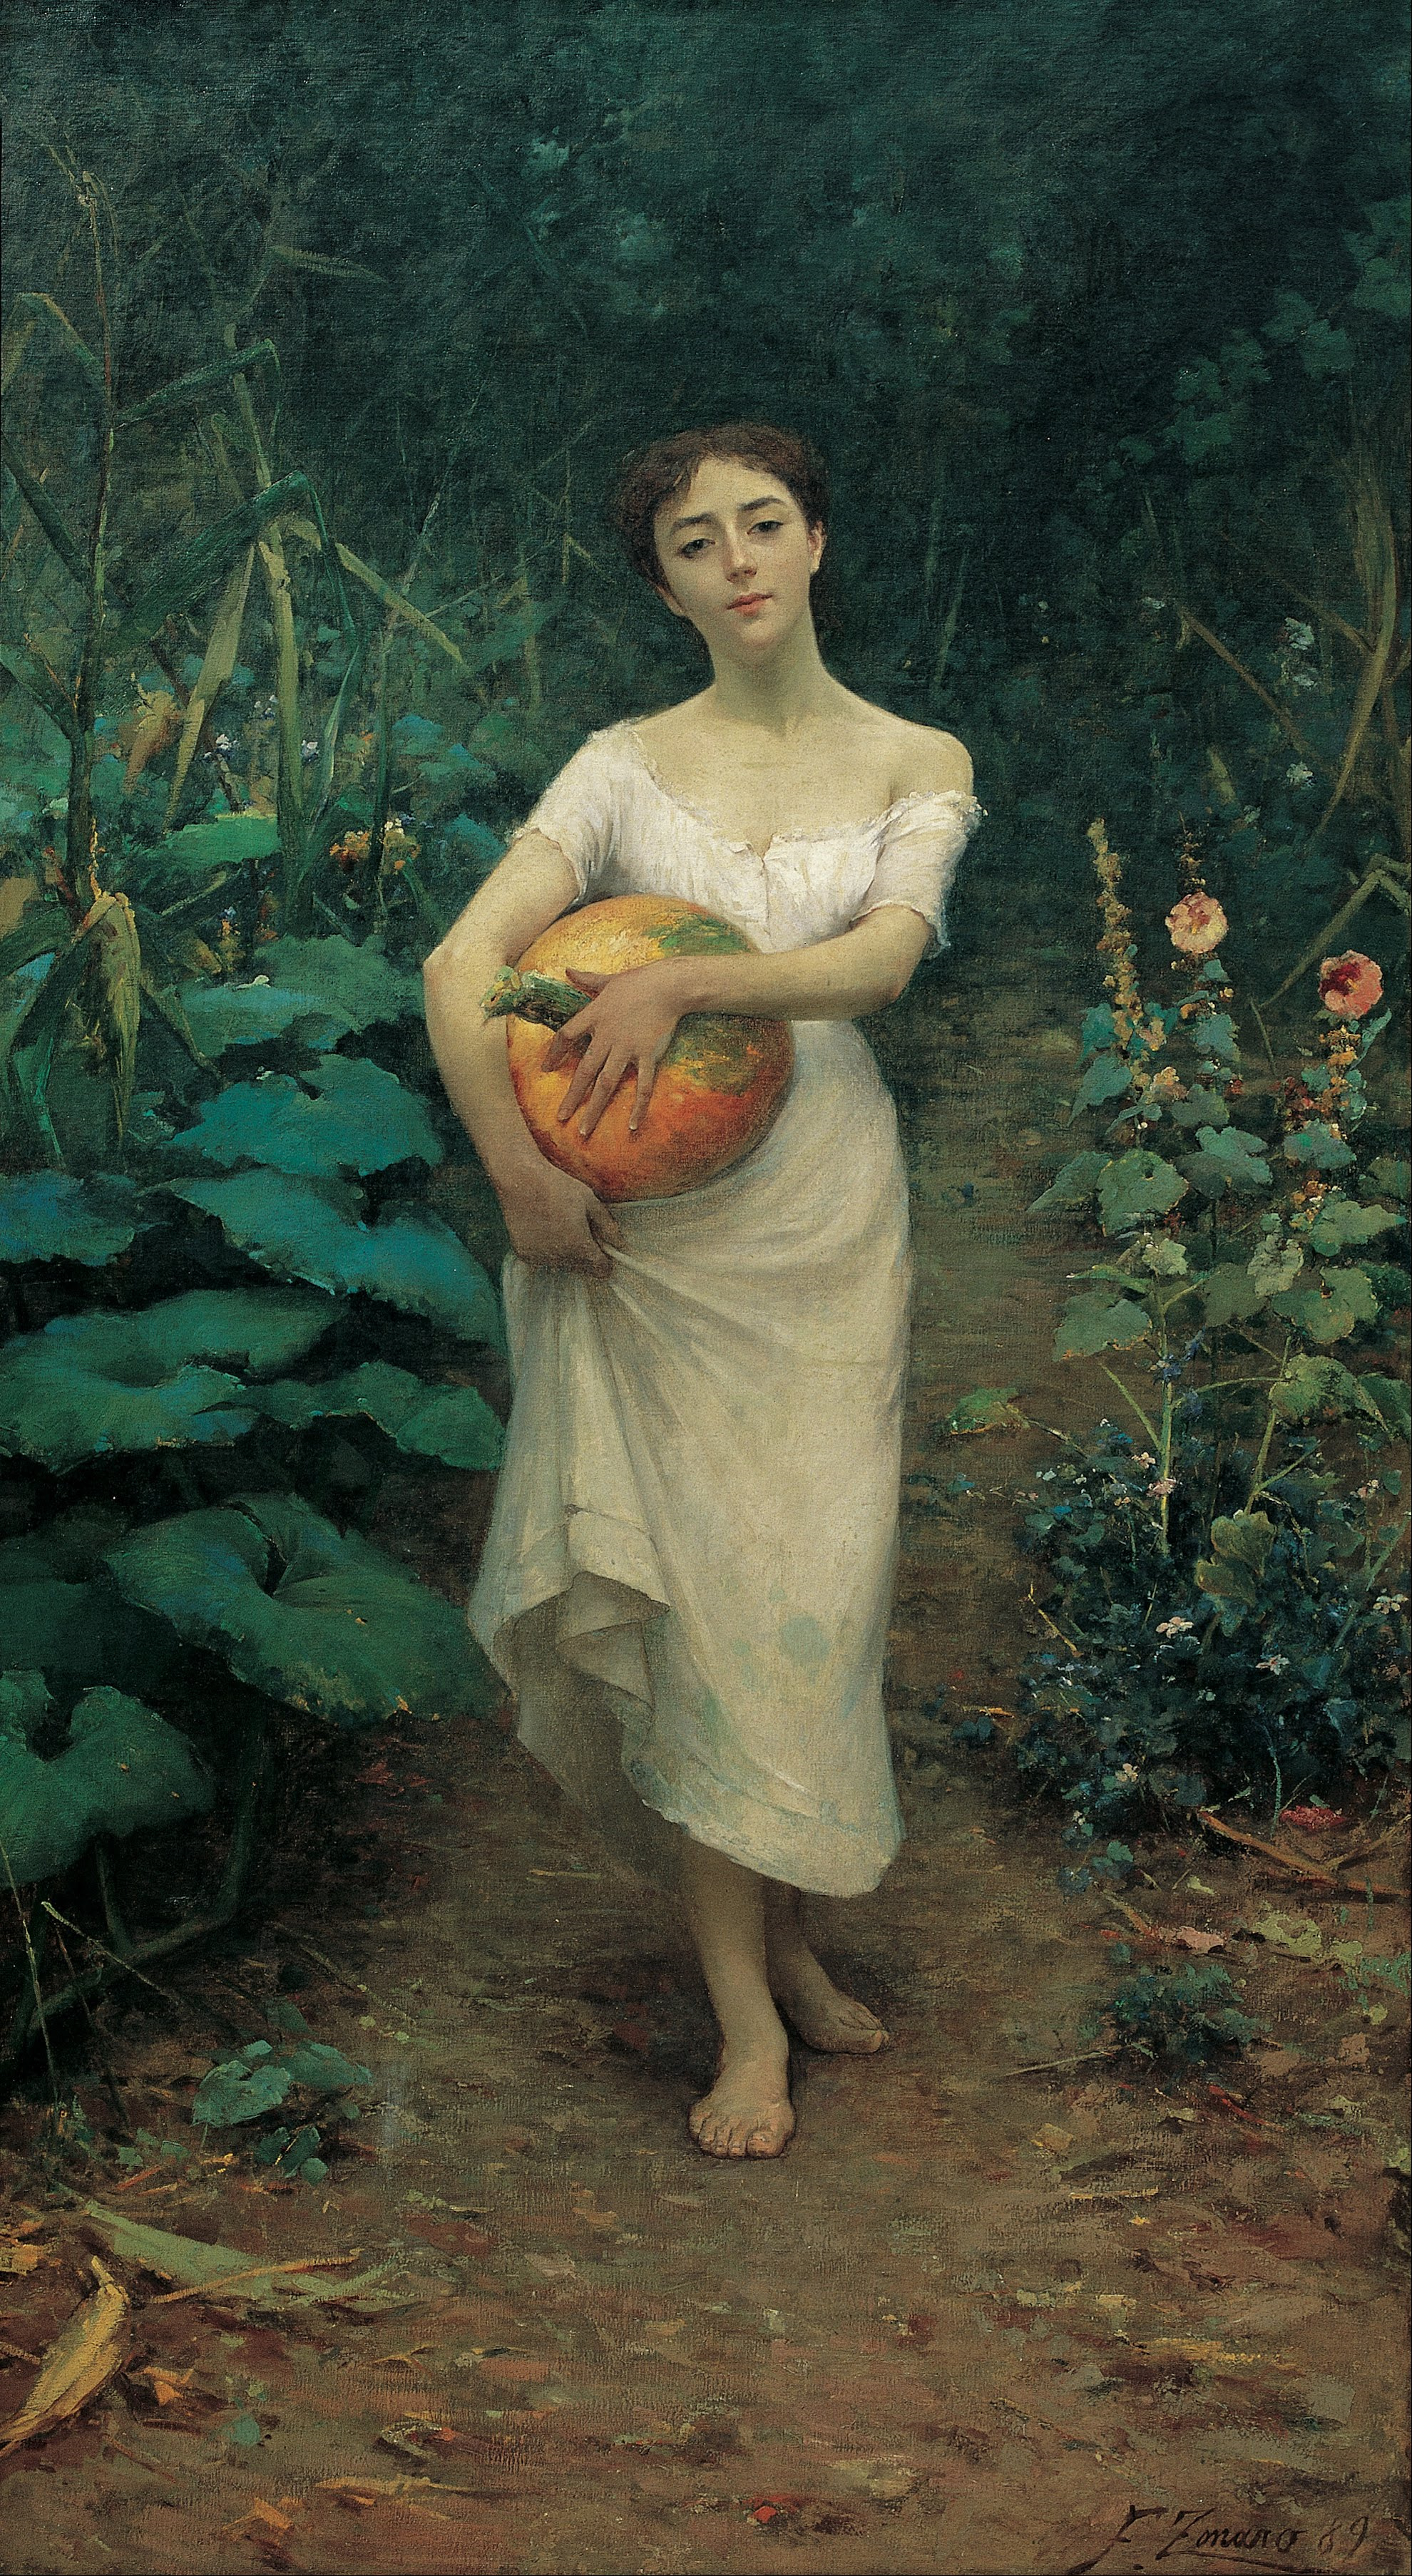 提著南瓜的年輕女孩 by Fausto Zonaro - 1889 - 137 x 245 cm 